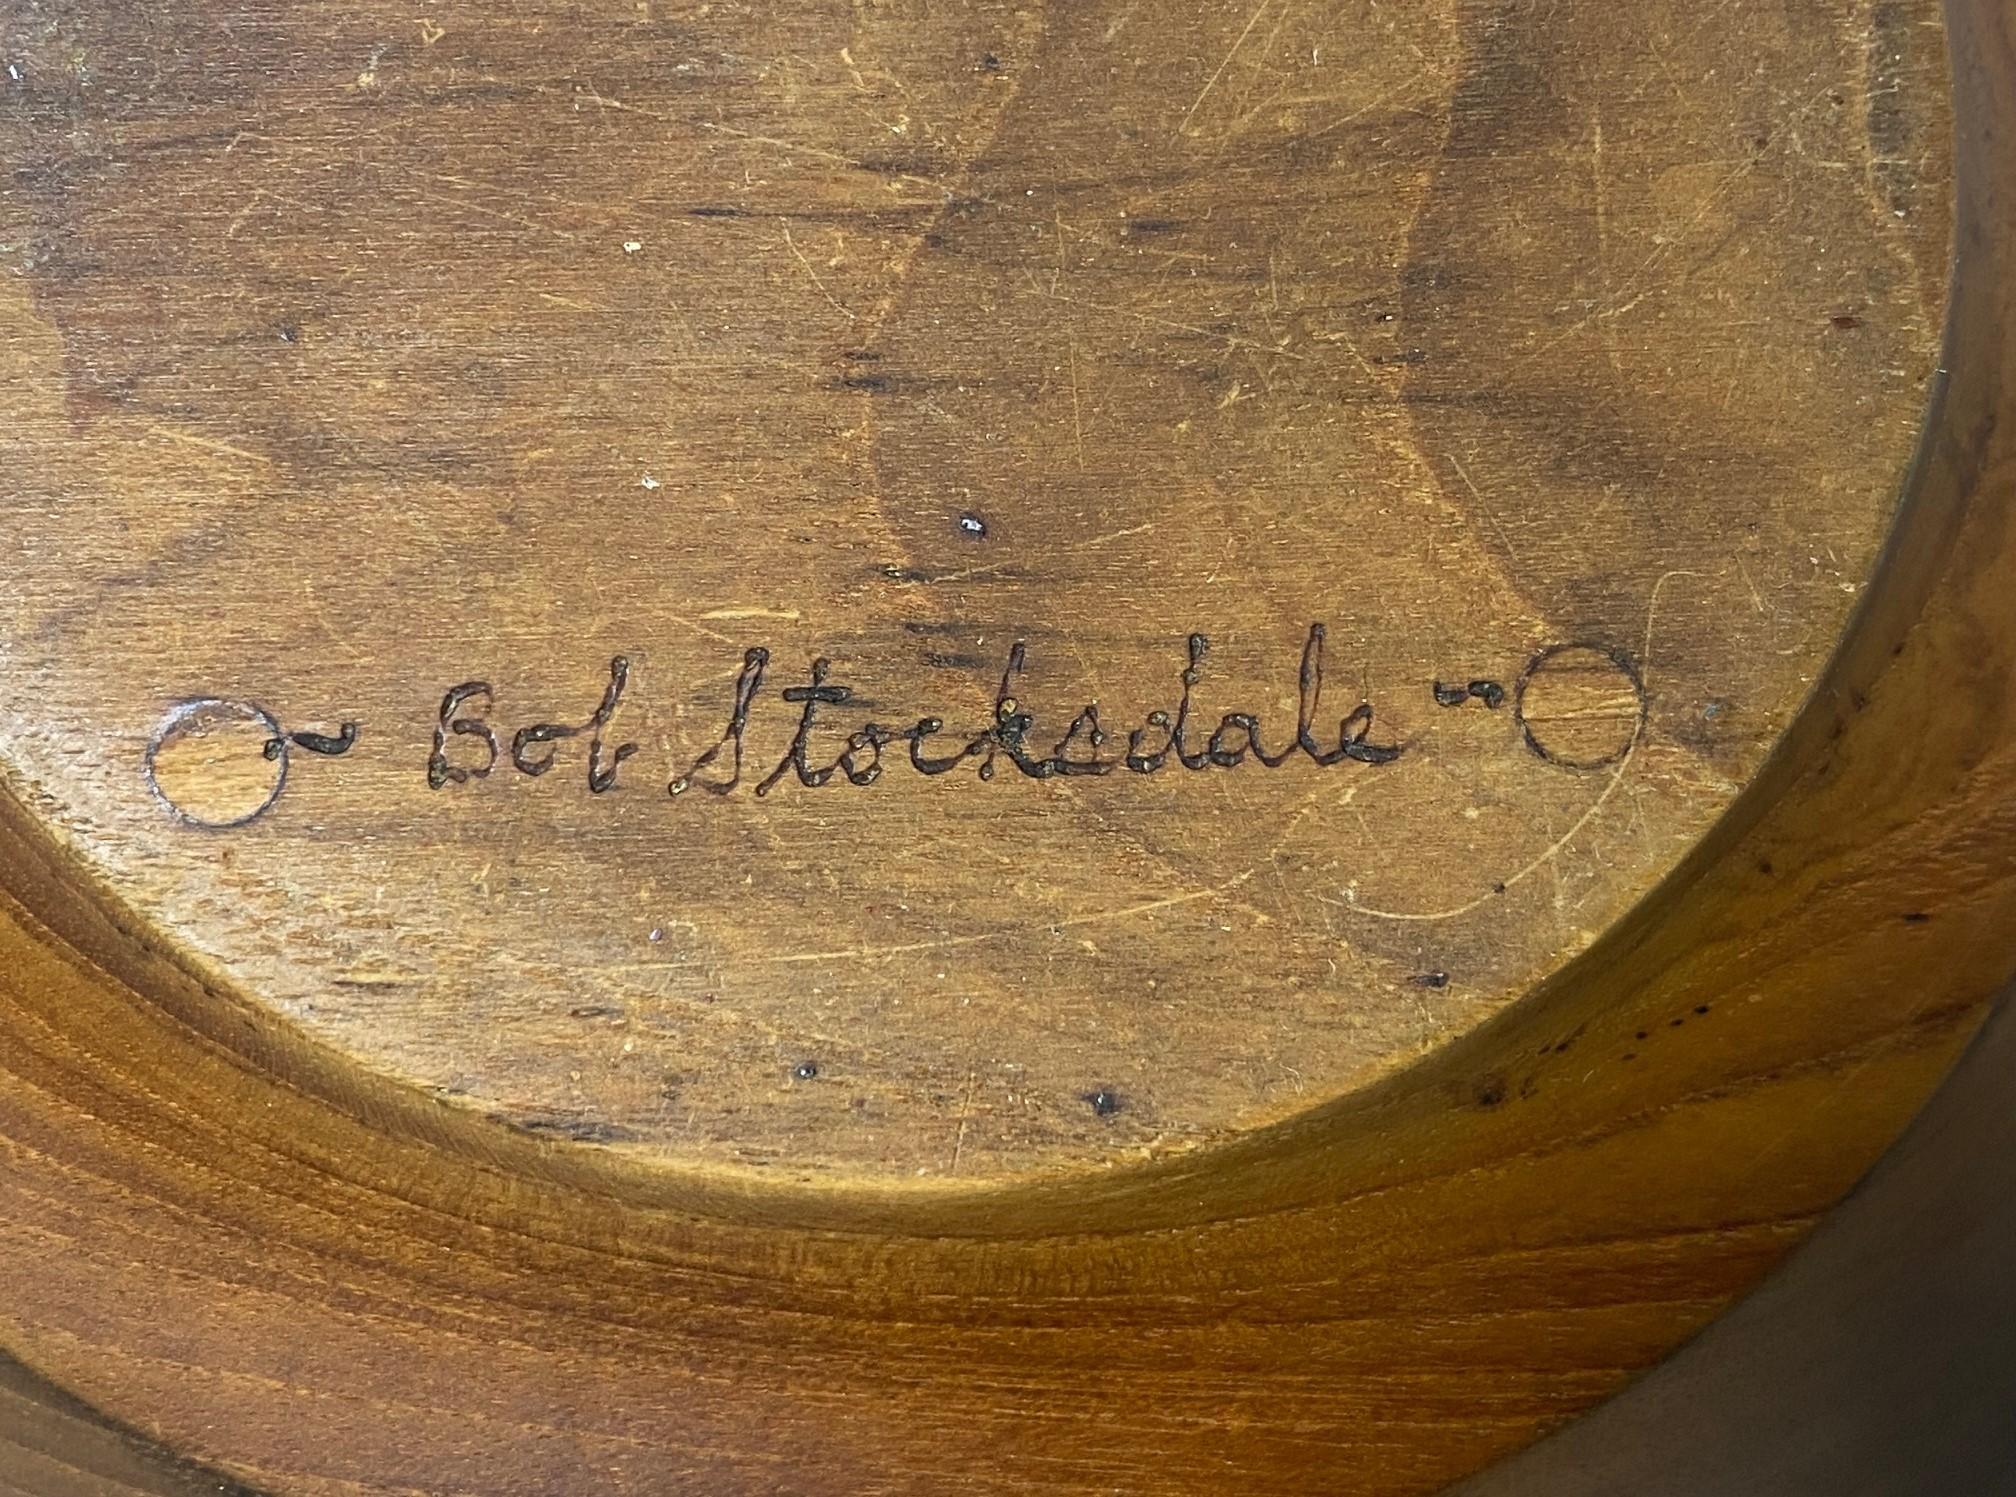 Bob Stocksdale Signed Mid-Century Modern Turned Teak Wood Large Art Bowl For Sale 8